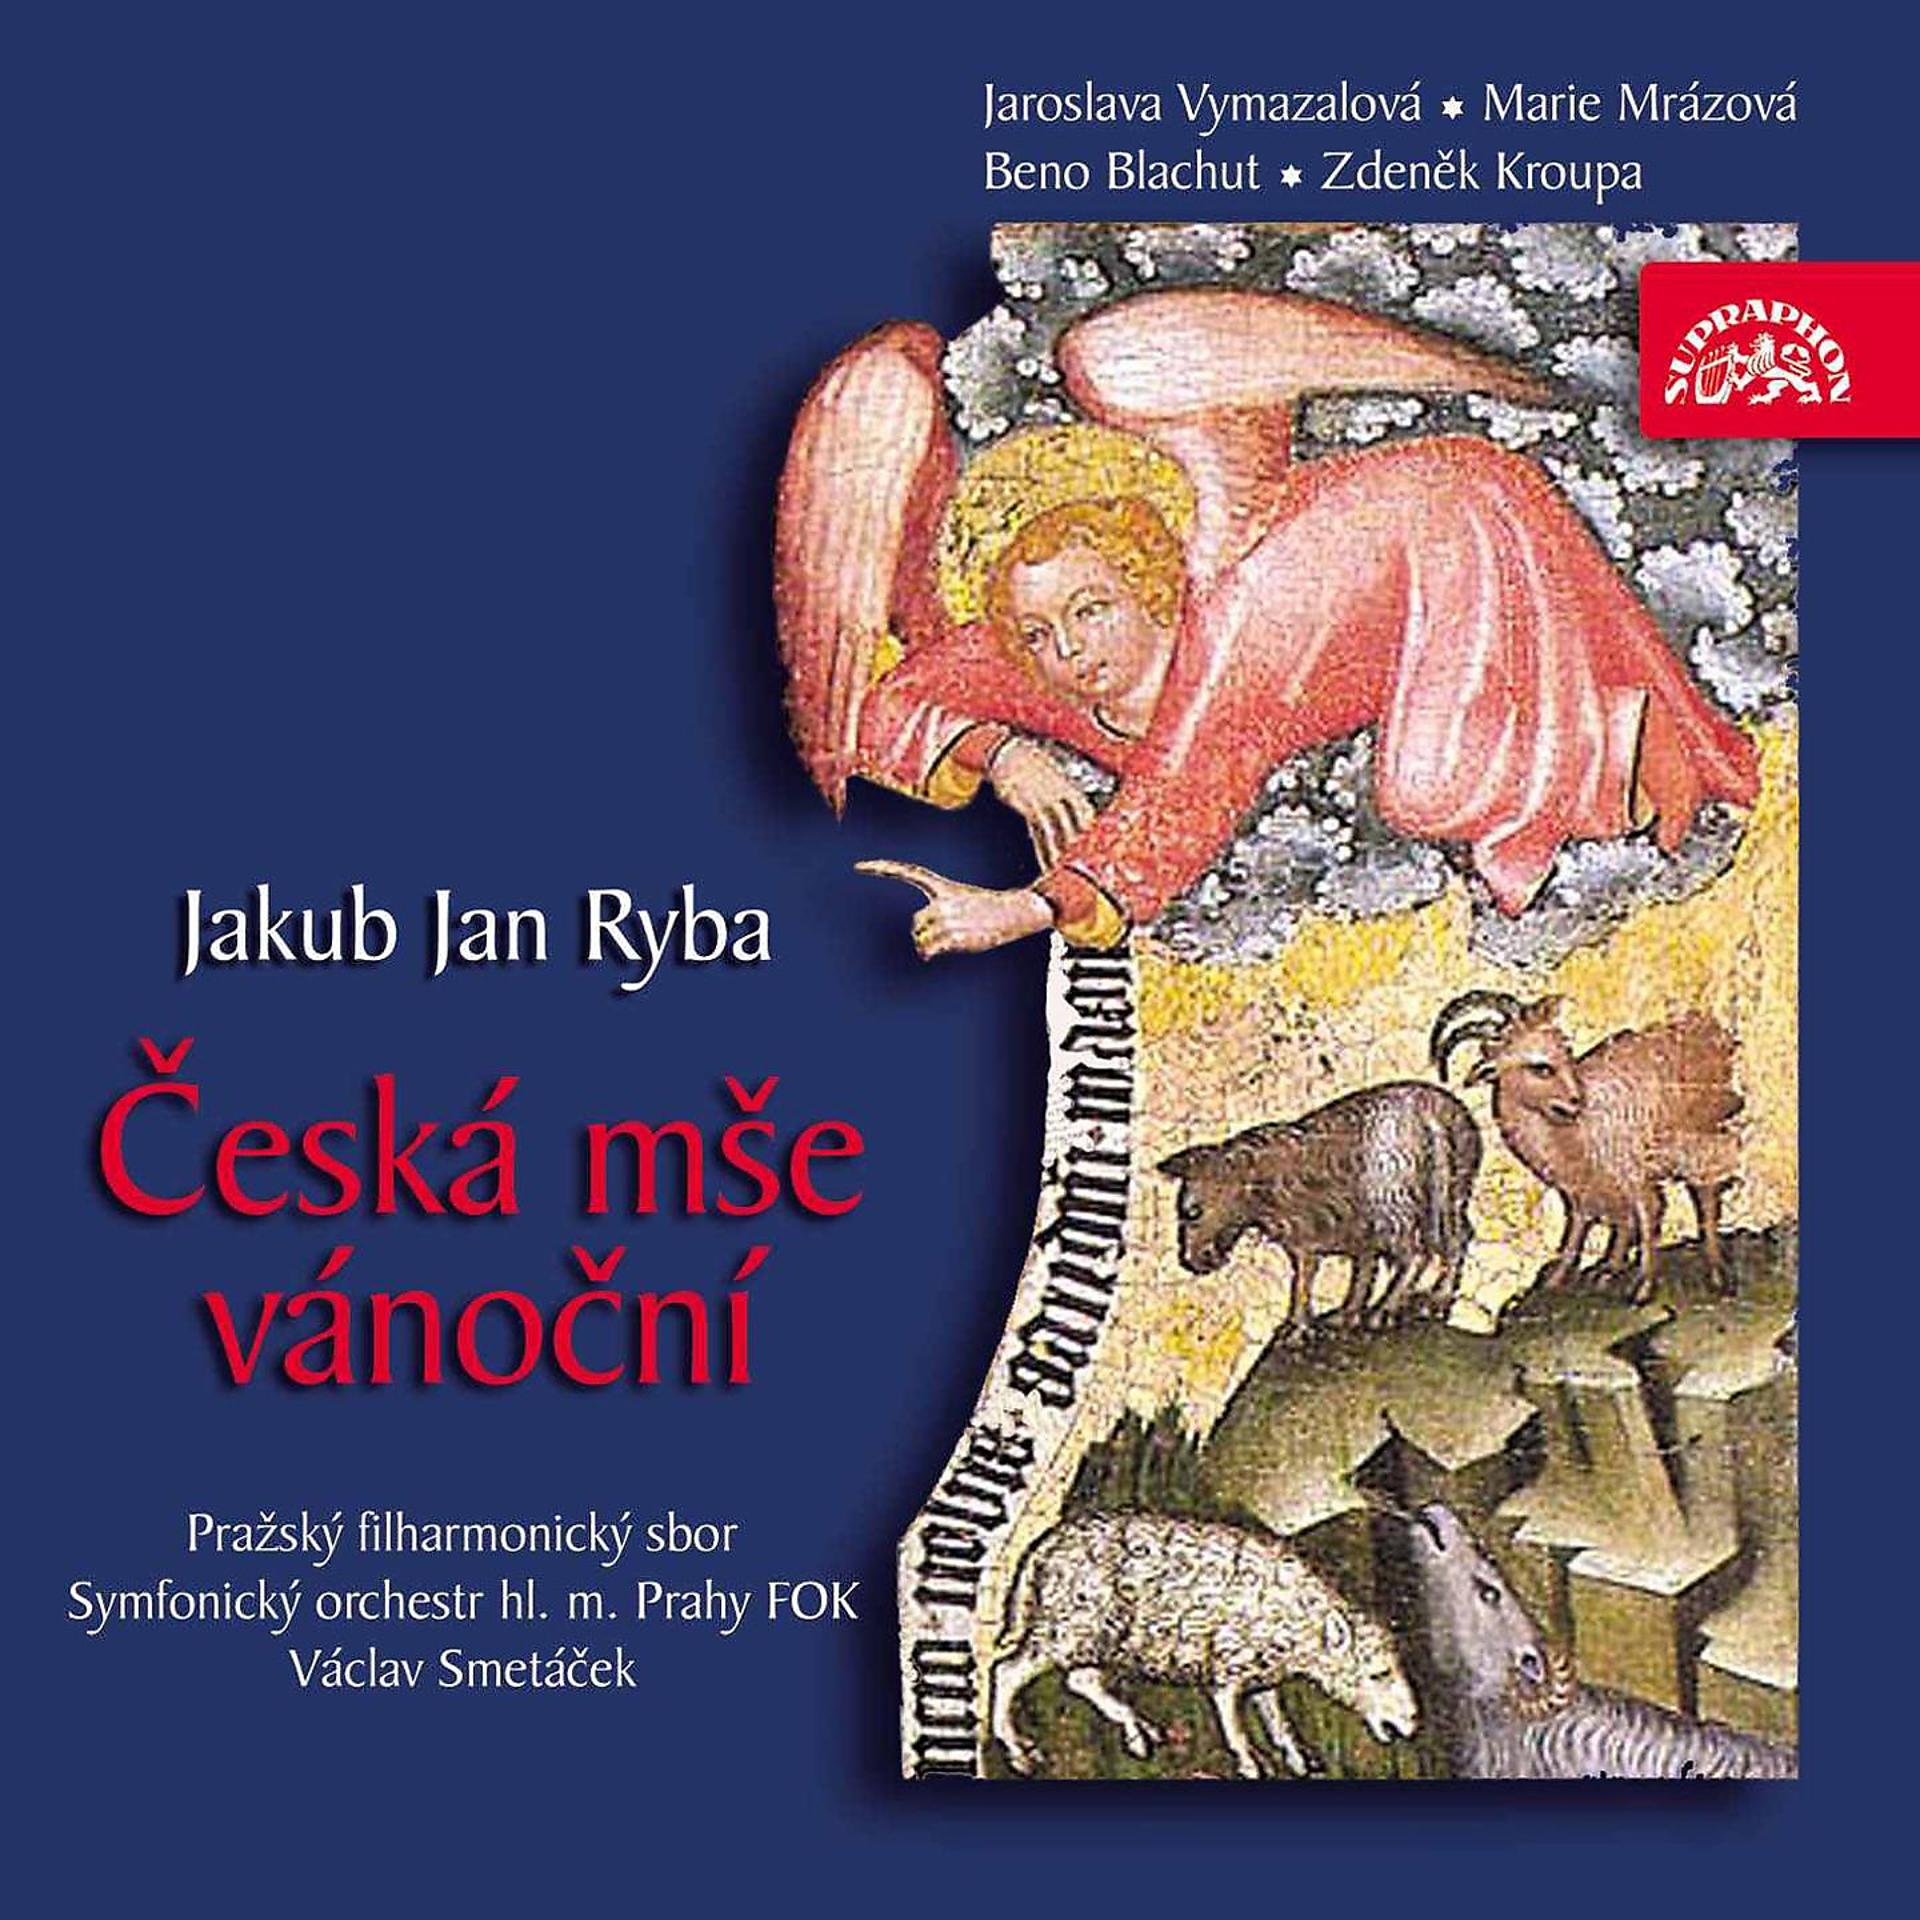 Постер альбома Ryba: Czech Christmas Mass